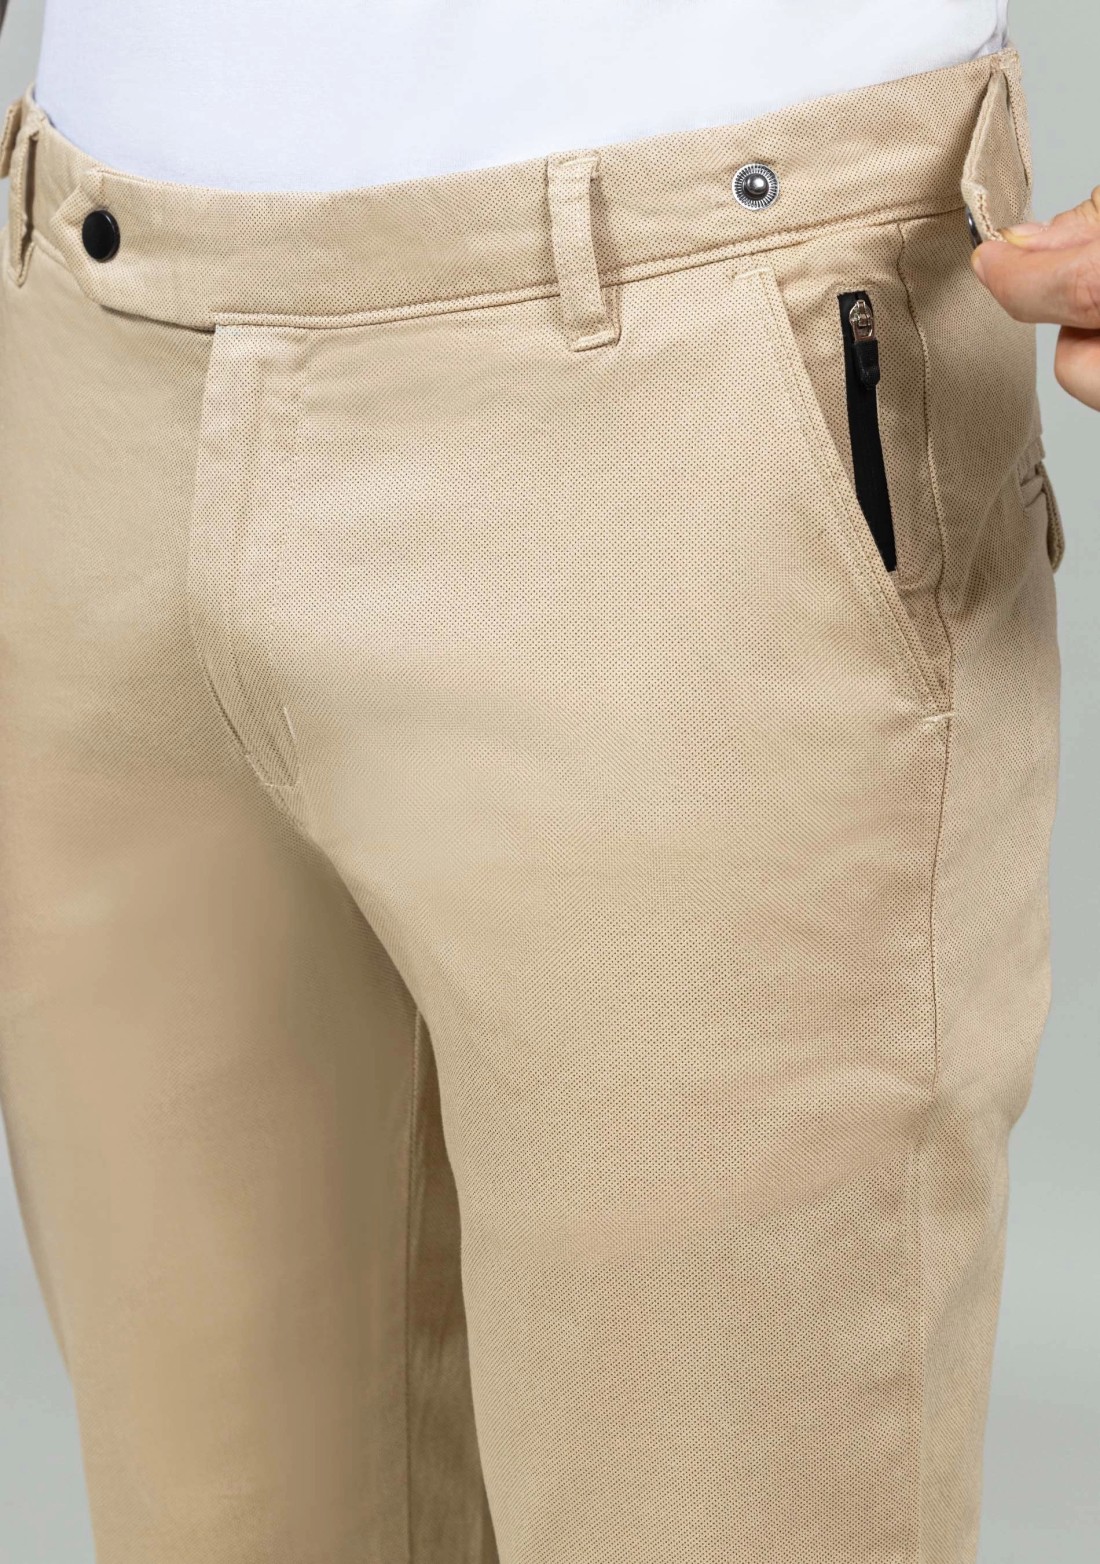 Beige Slim Fit Men's Fashion Trousers